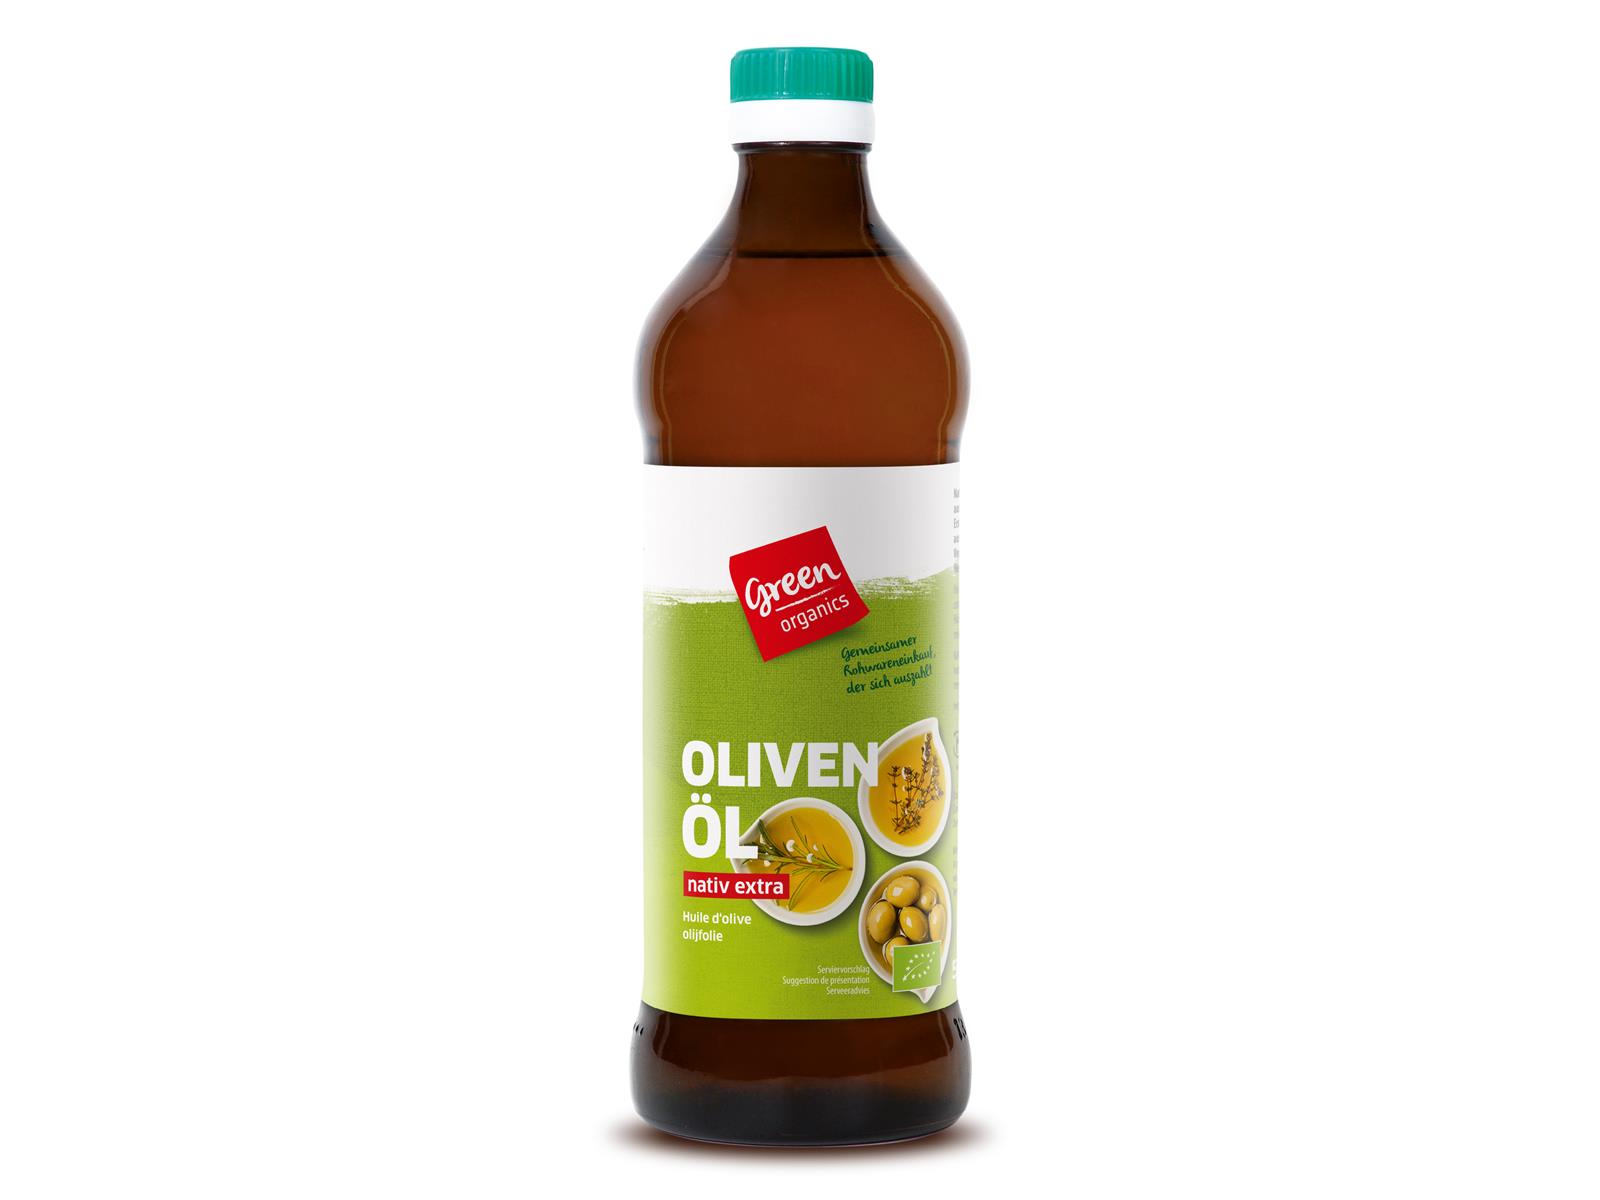 greenorganics Olivenöl nativ extra 500ml